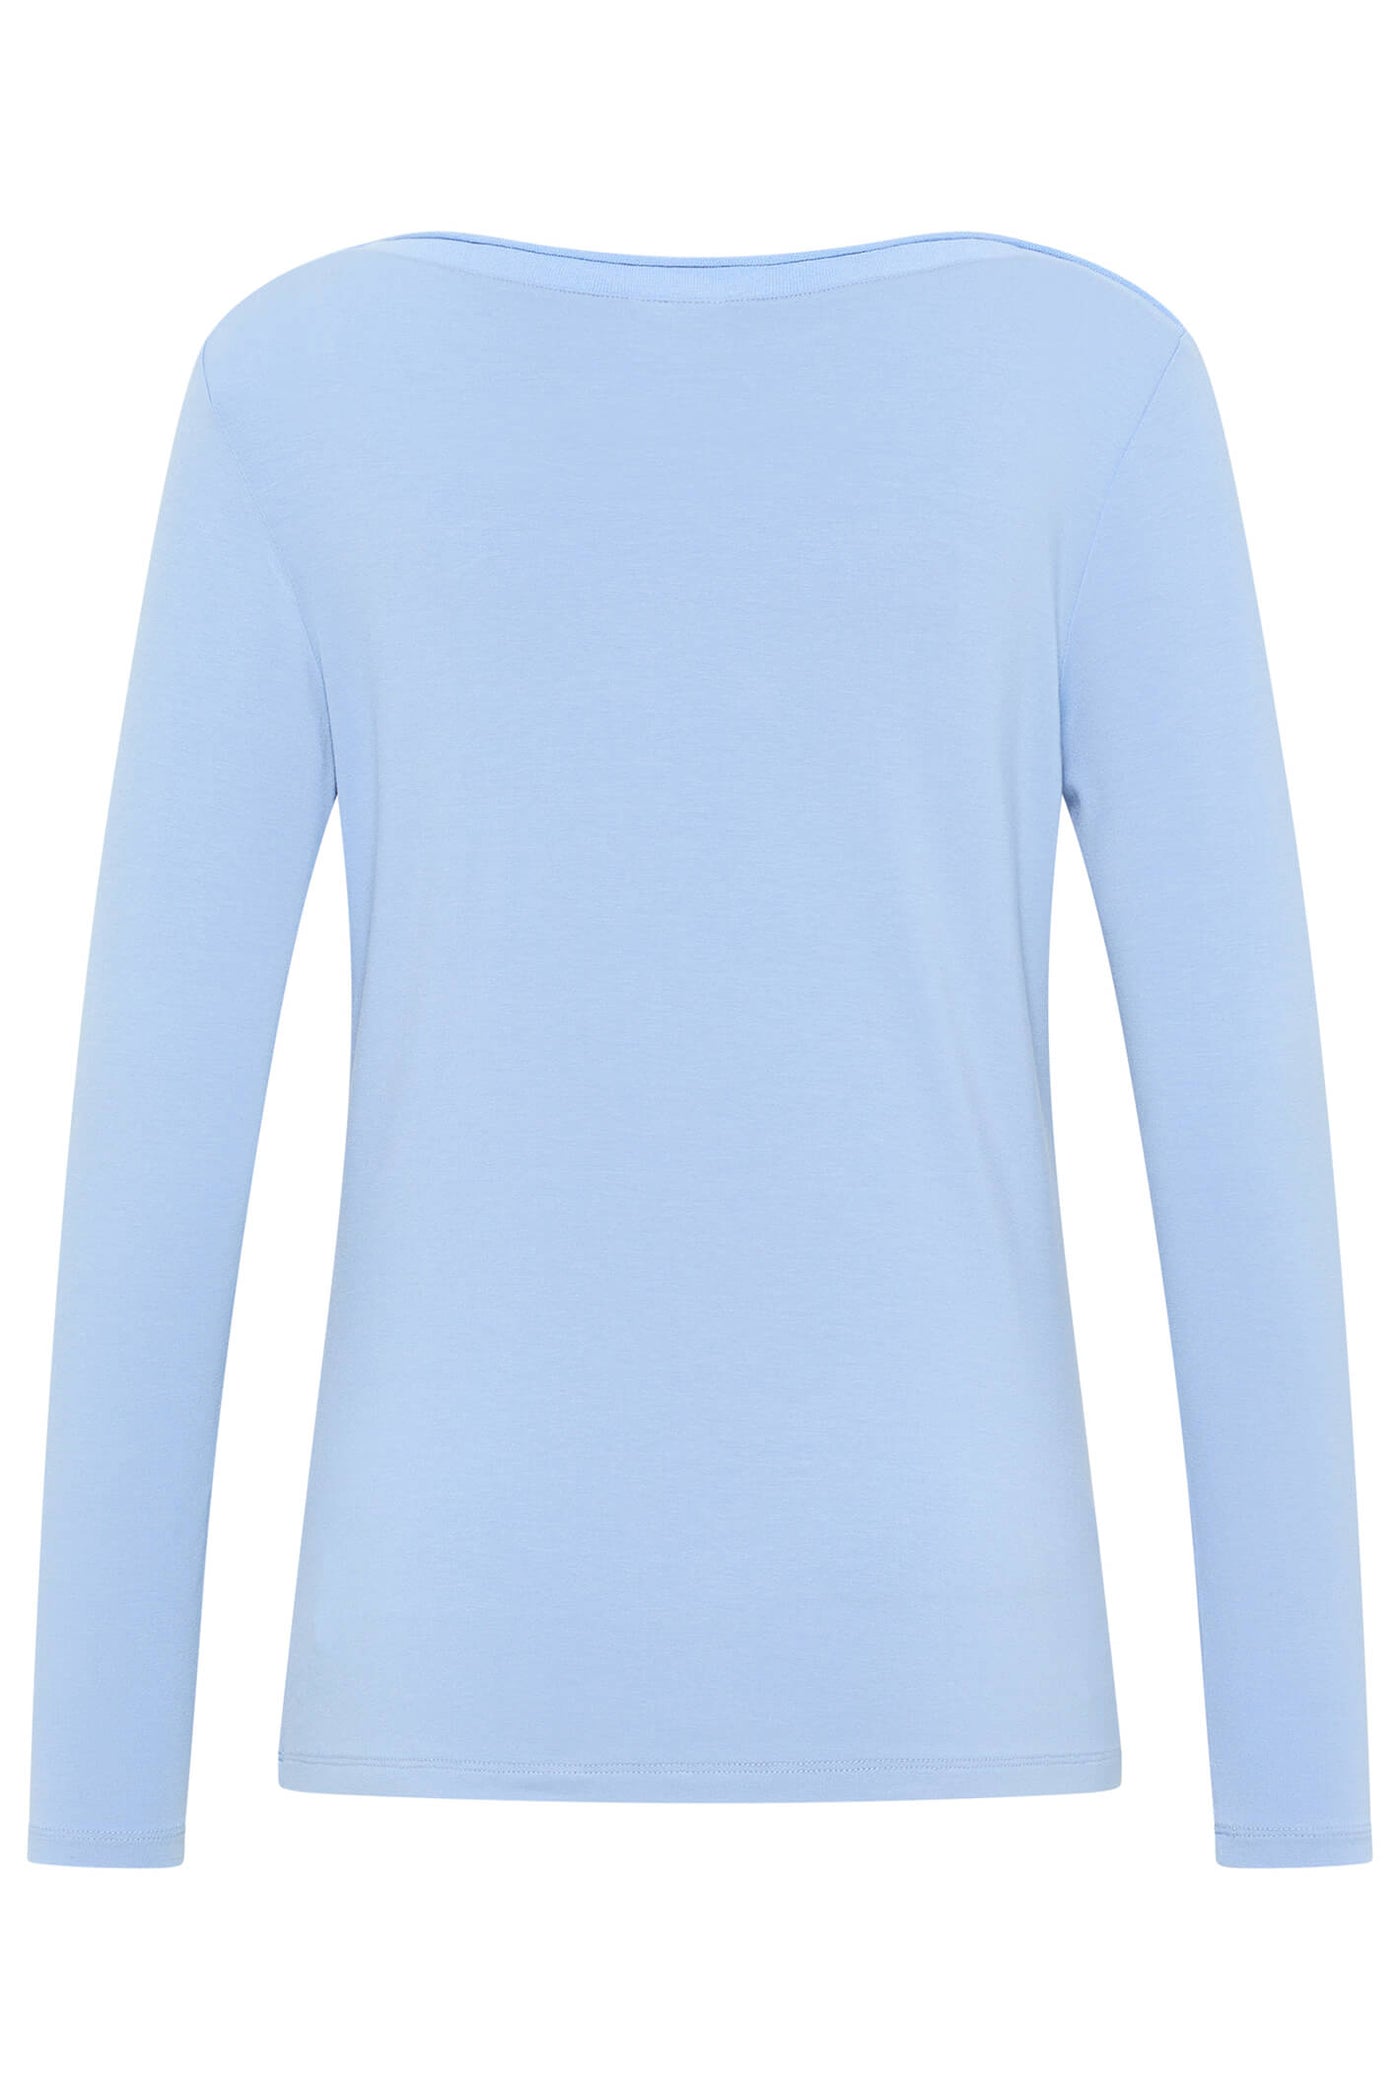 Barbara Lebek 36000032 Sky Blue Boat Neck Long Sleeve T-Shirt - Rouge Boutique